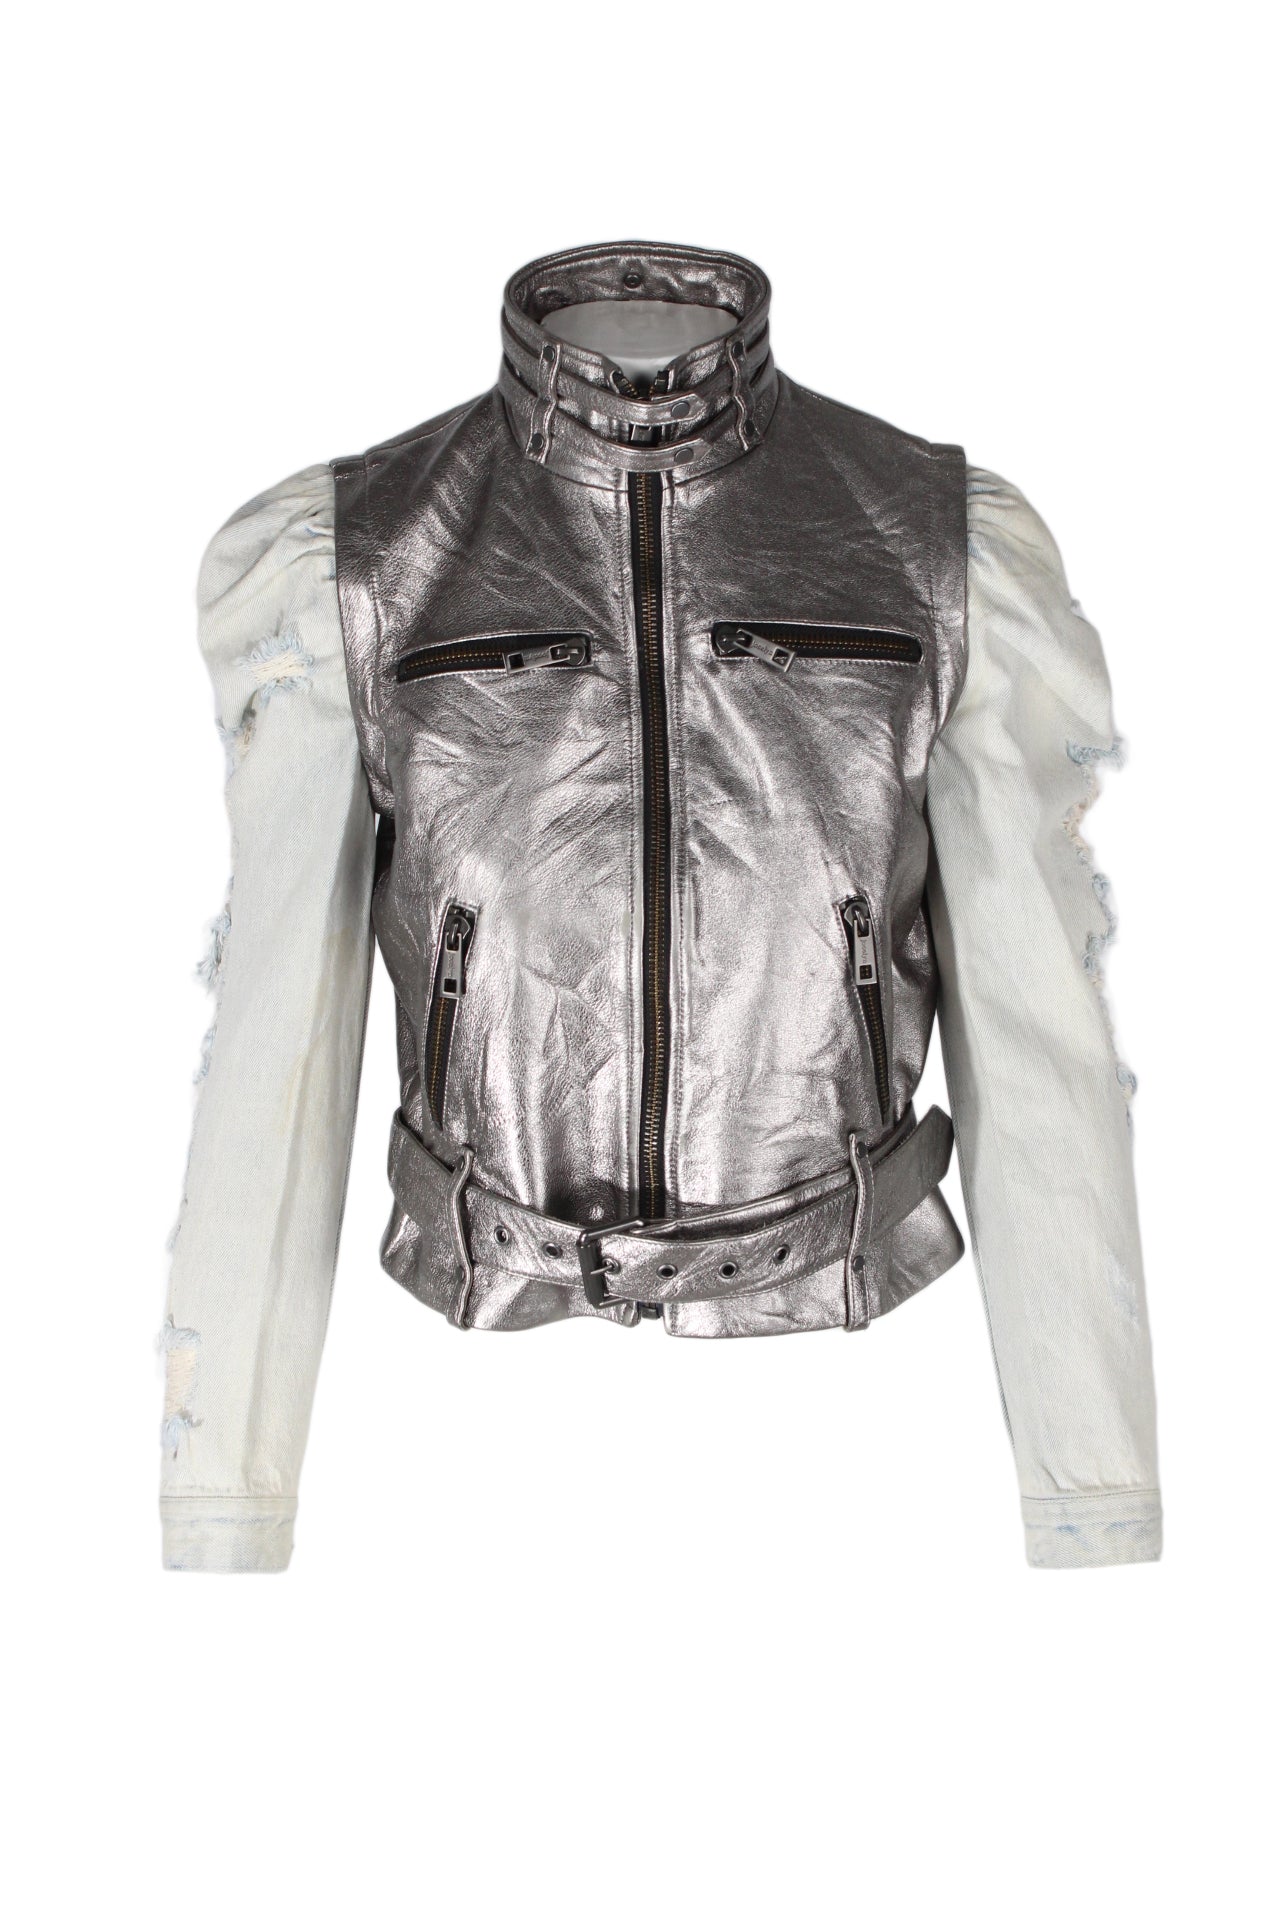 metallic silver jacket with puffed denim sleeves